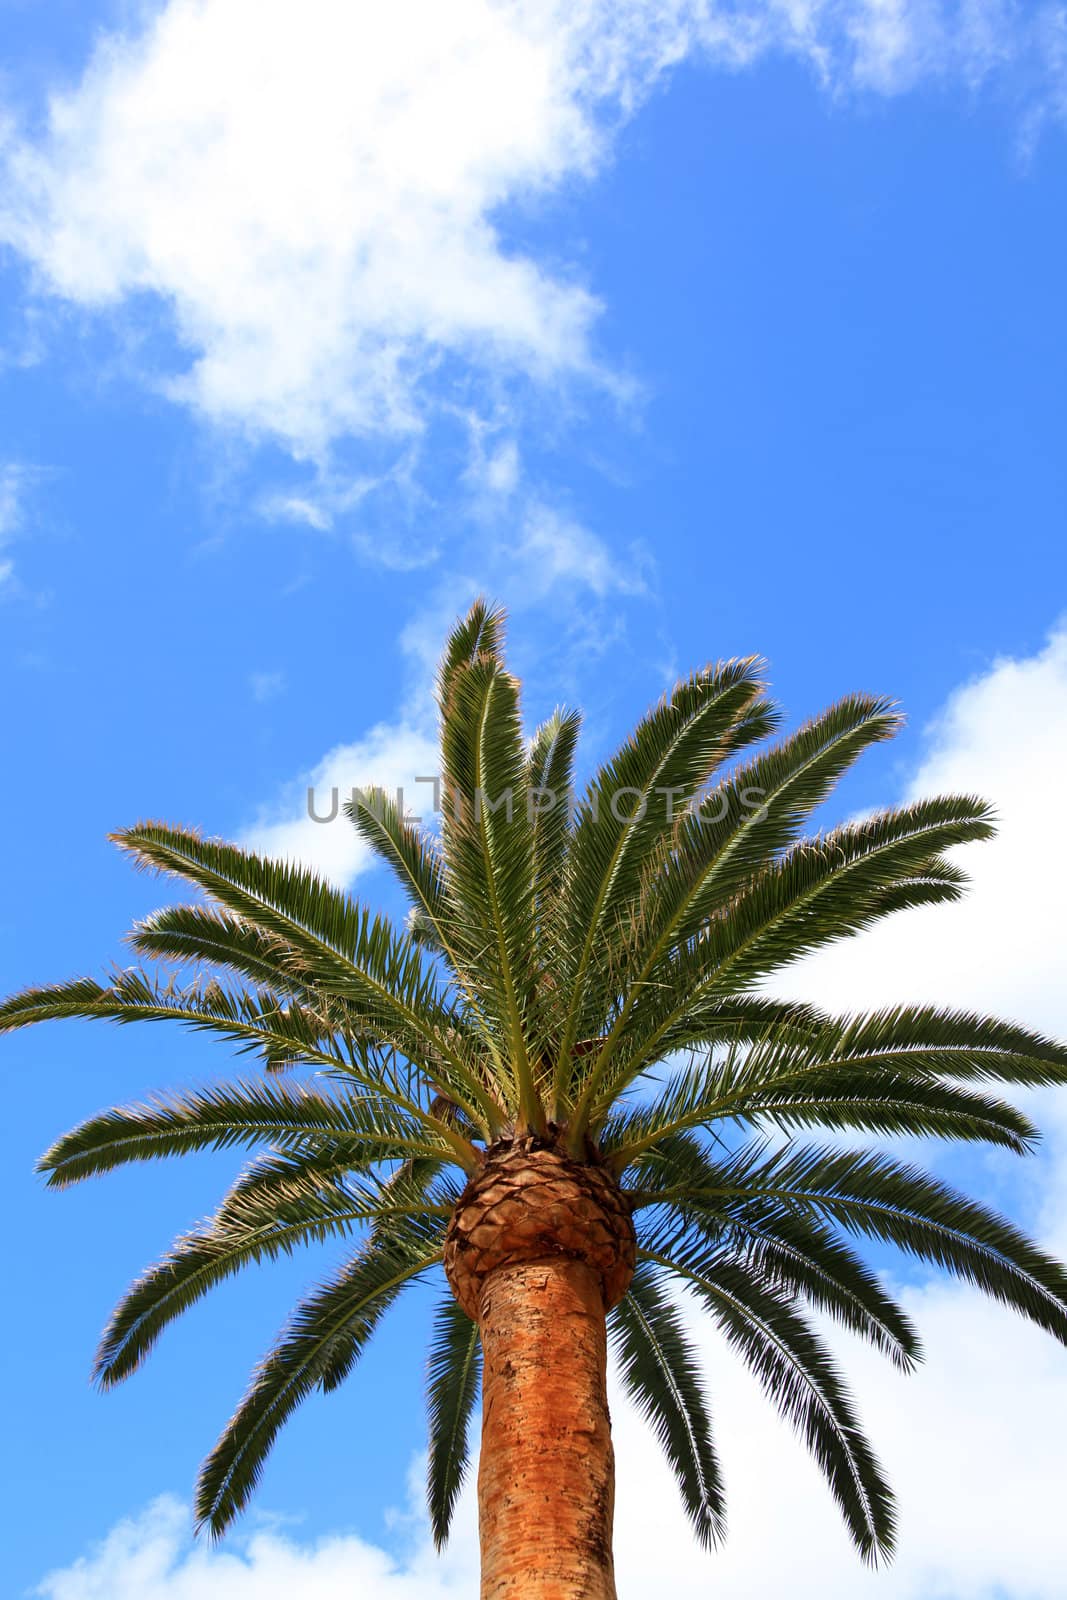 Palm on blue sky background by adrianocastelli